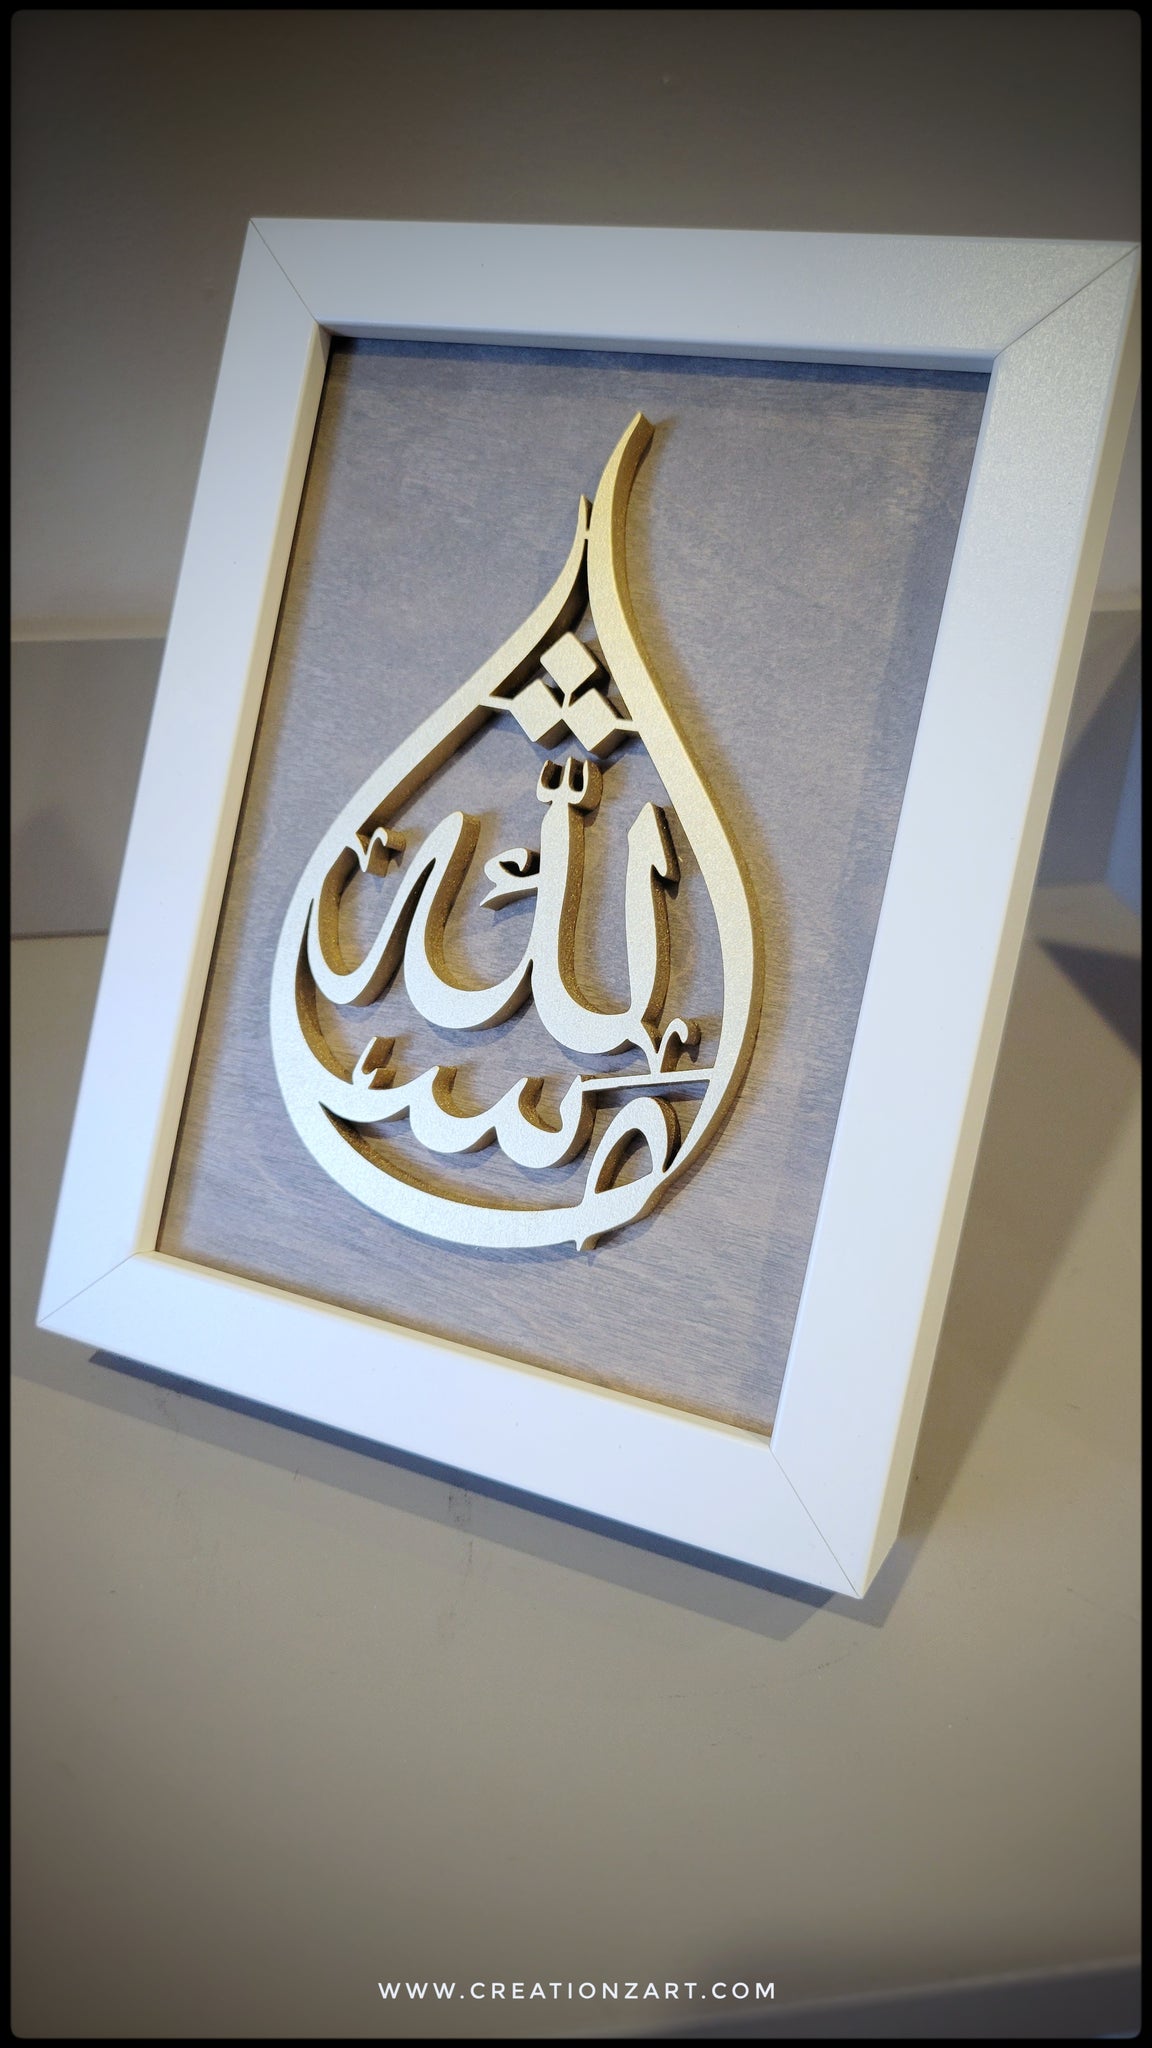 MashAllah wood artwork frame - Islamic Artwork - modern Arabic calligraphy art